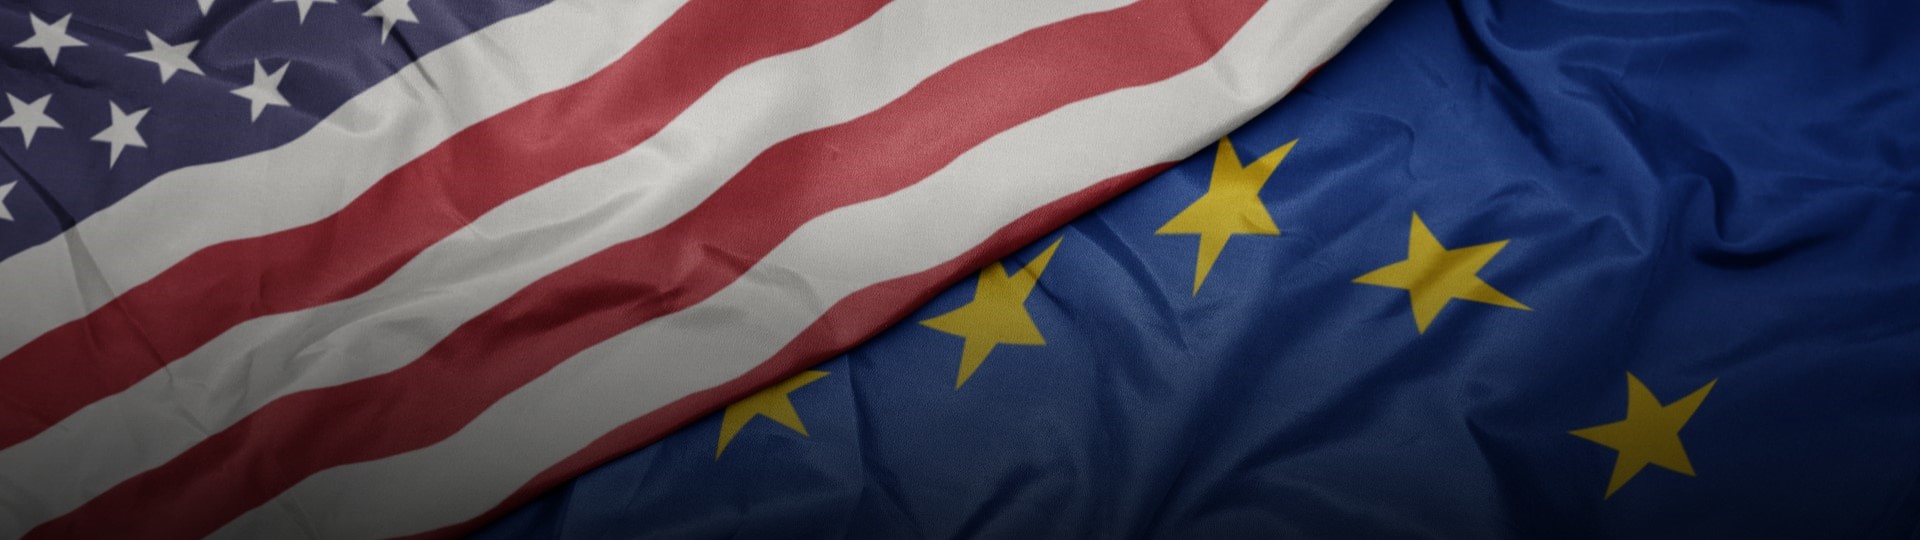 Ekonomické Spojené státy vs. ekologická Evropská unie